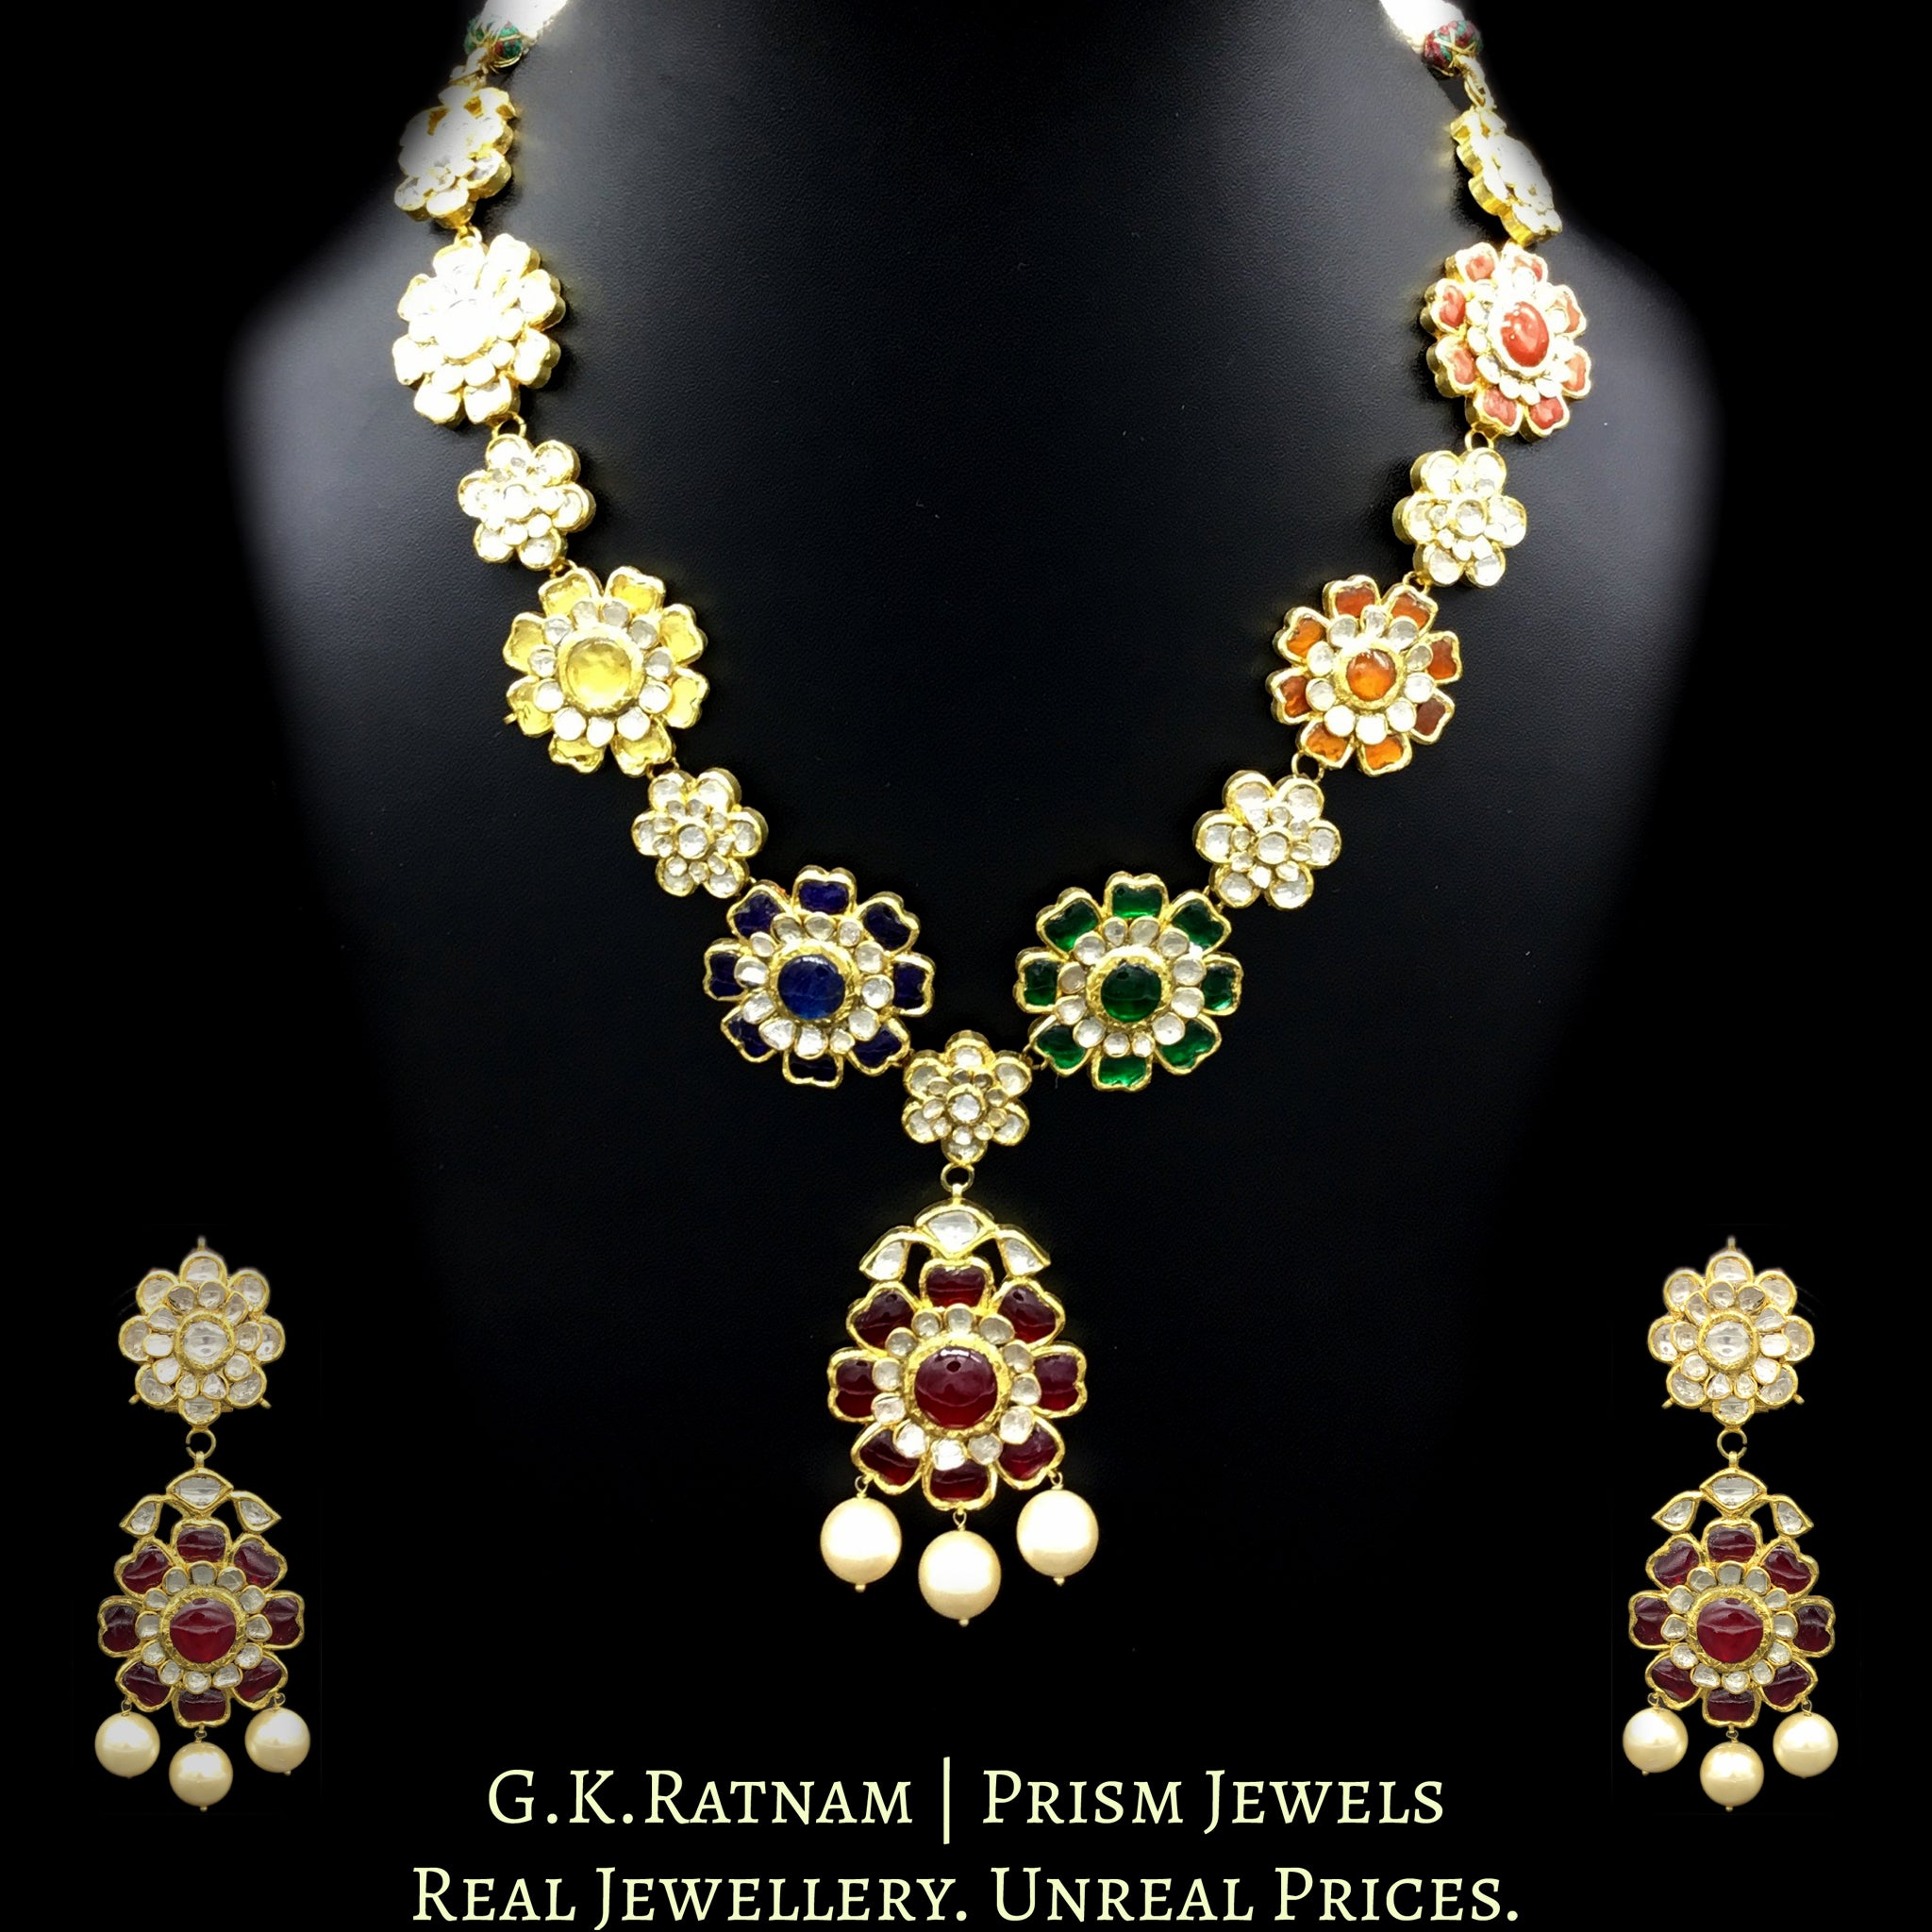 18k Gold and Diamond Polki Navratna Long Necklace Set with colorful flower-shaped tikdas - G. K. Ratnam